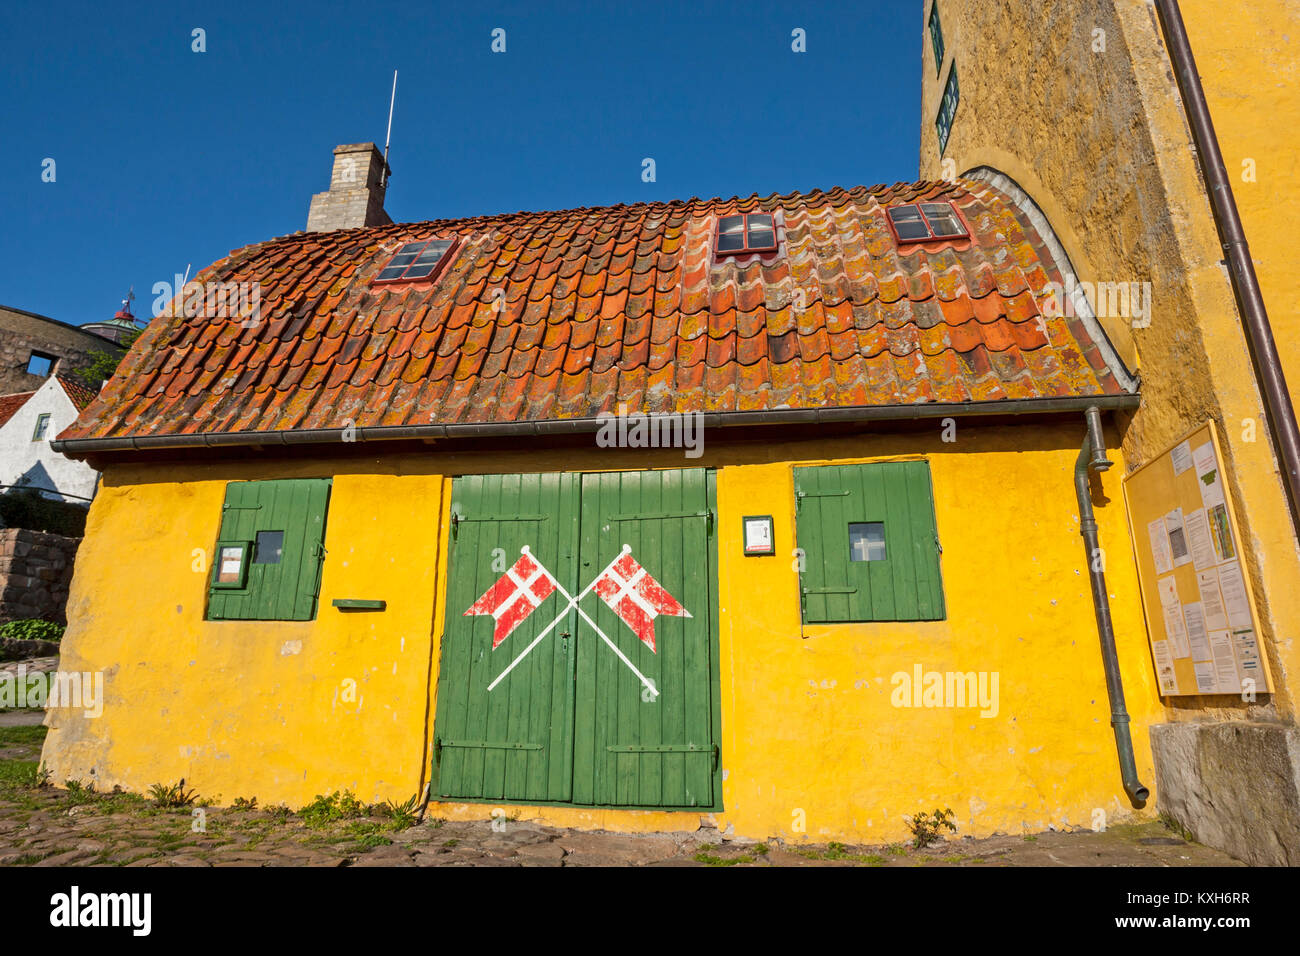 Puerta Verde, banderas danesas, techo curvo con baldosas rojas en el Bohlendachhuset, Christiansø, Ertholmene, Bornholm, Dinamarca Foto de stock